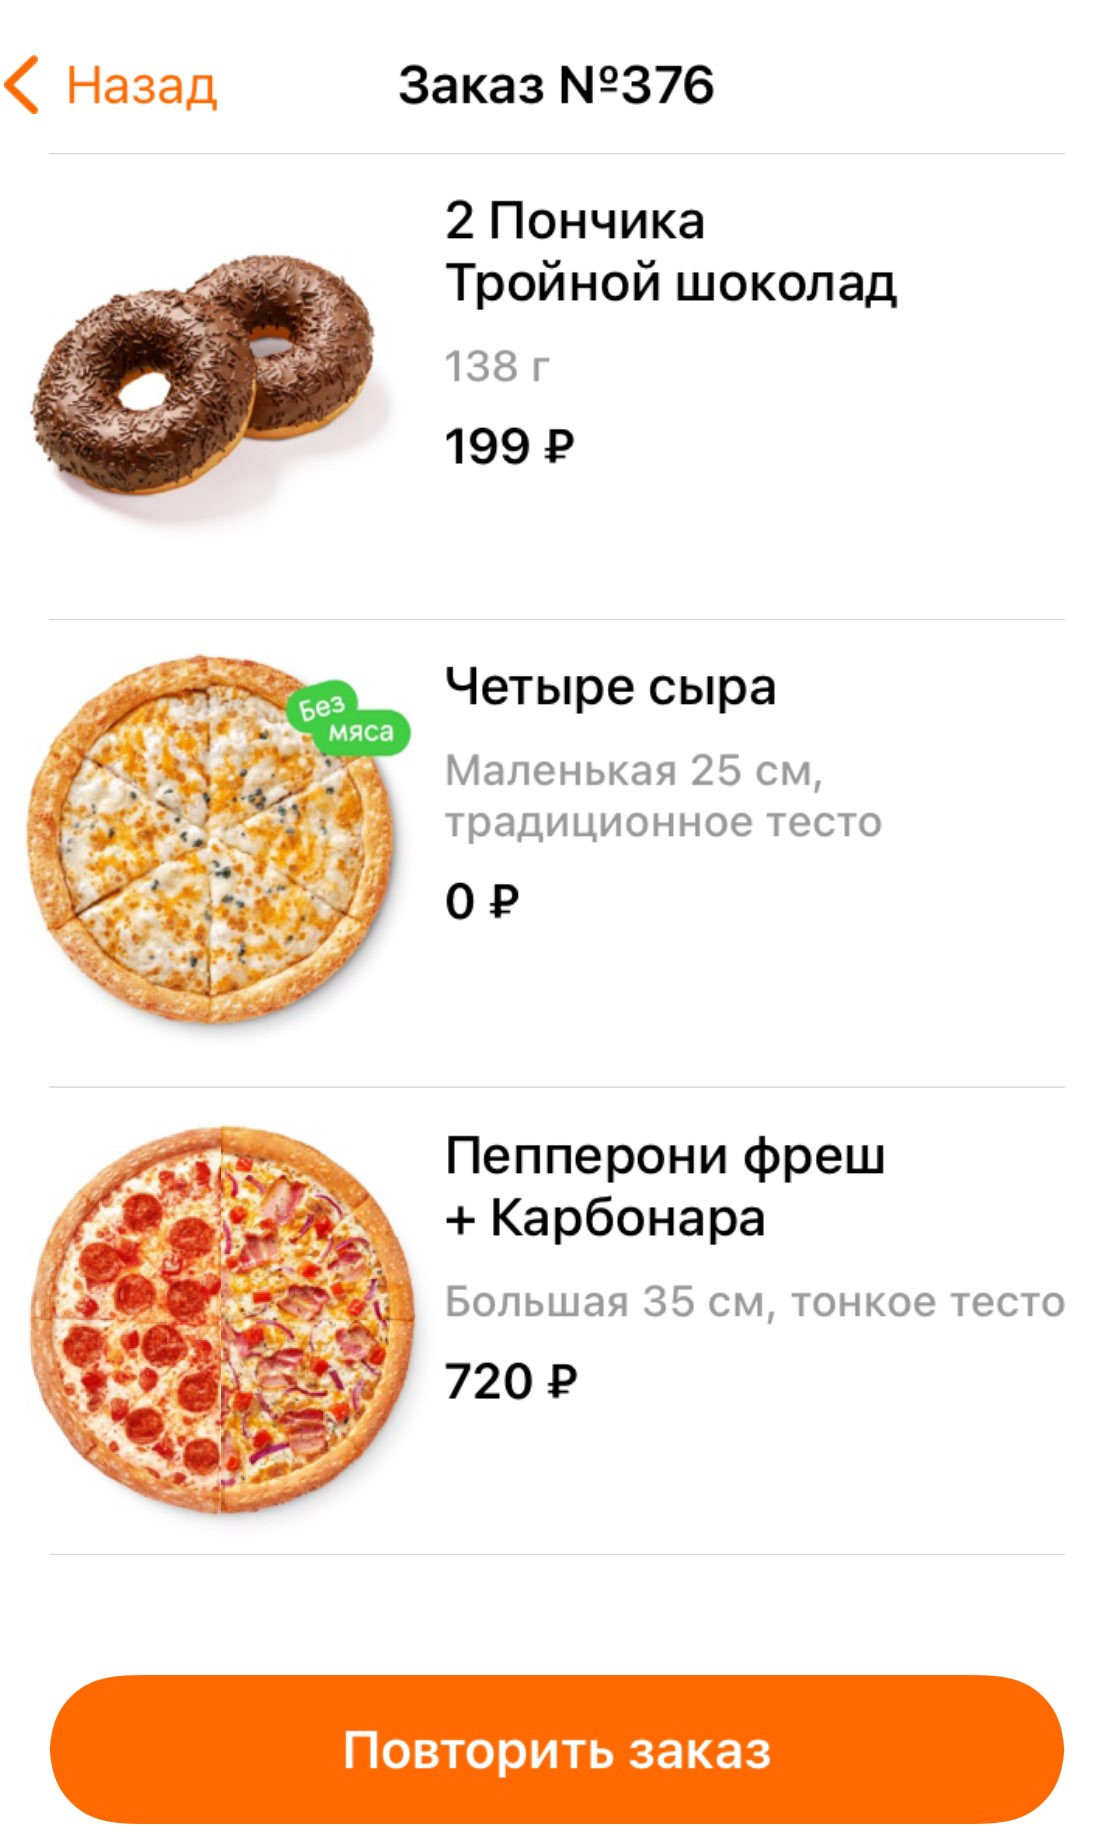 сколько стоит пицца пепперони в додо пицце фото 94